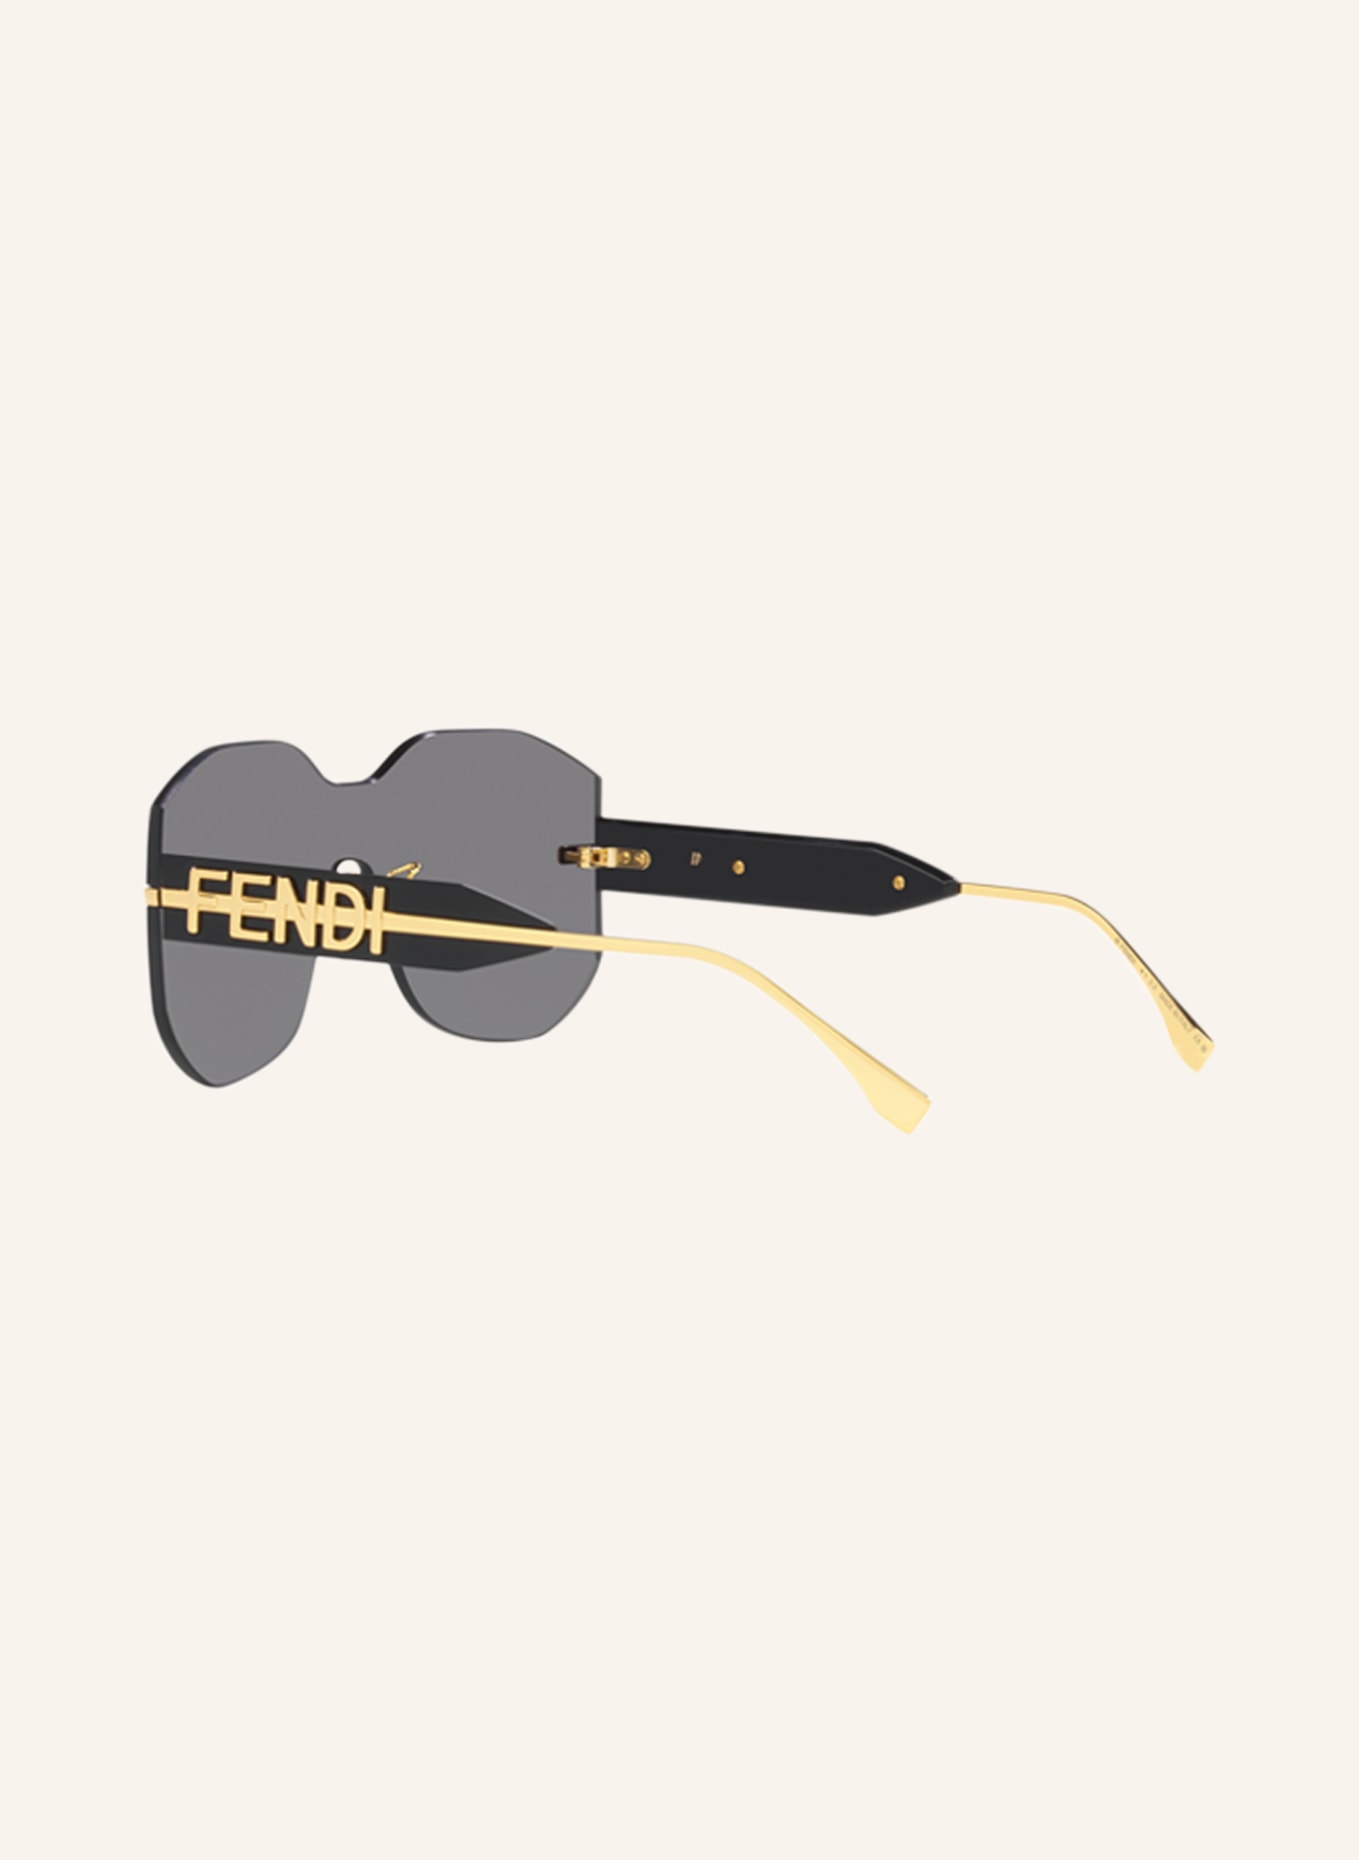 FENDI Sonnenbrille FN000635, Farbe: 2390L1 - GOLD/ DUNKELGRAU (Bild 4)